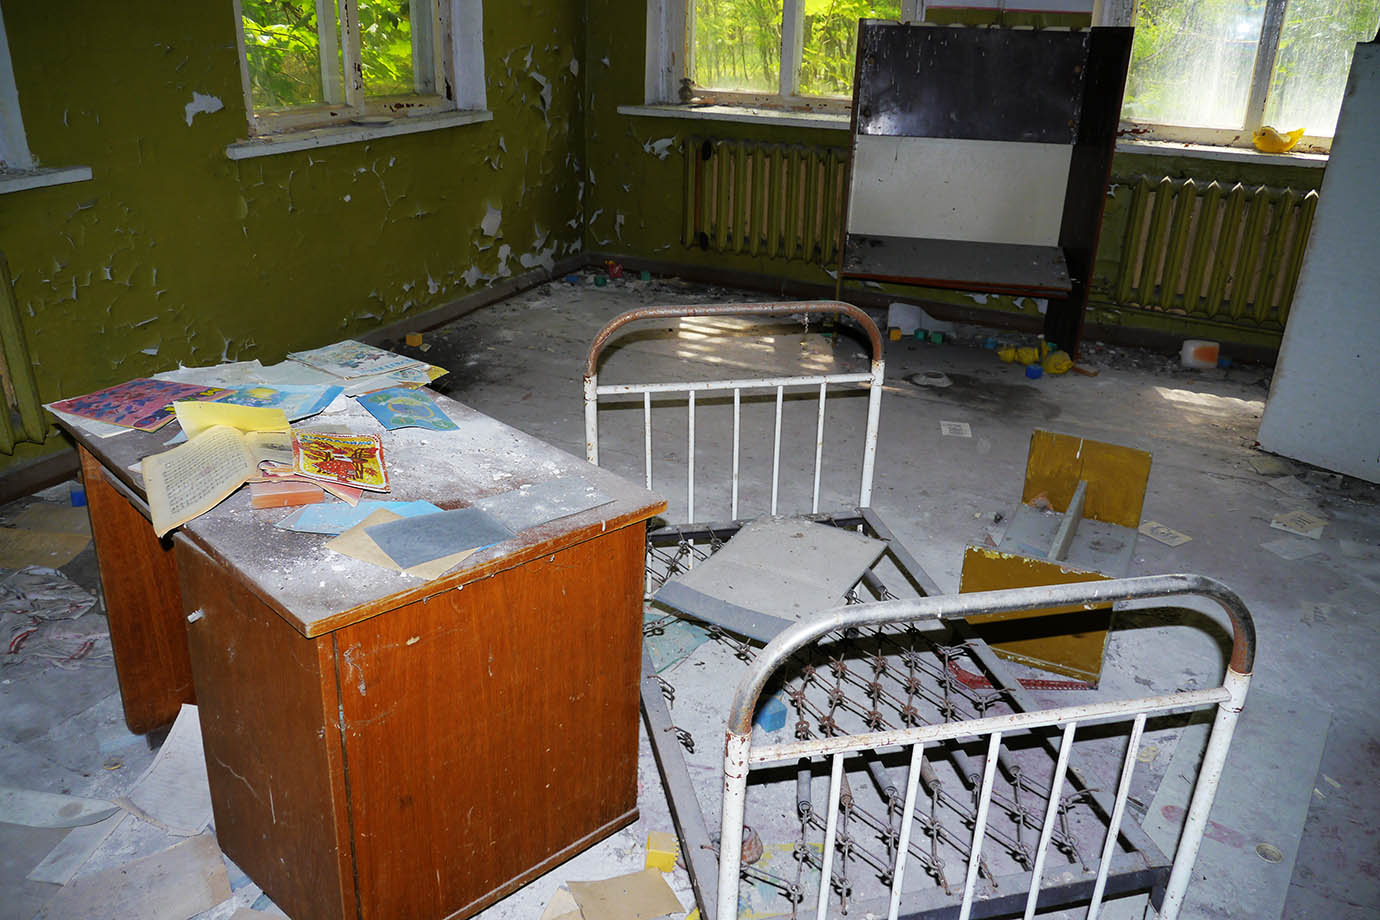 chernobyl-disaster21